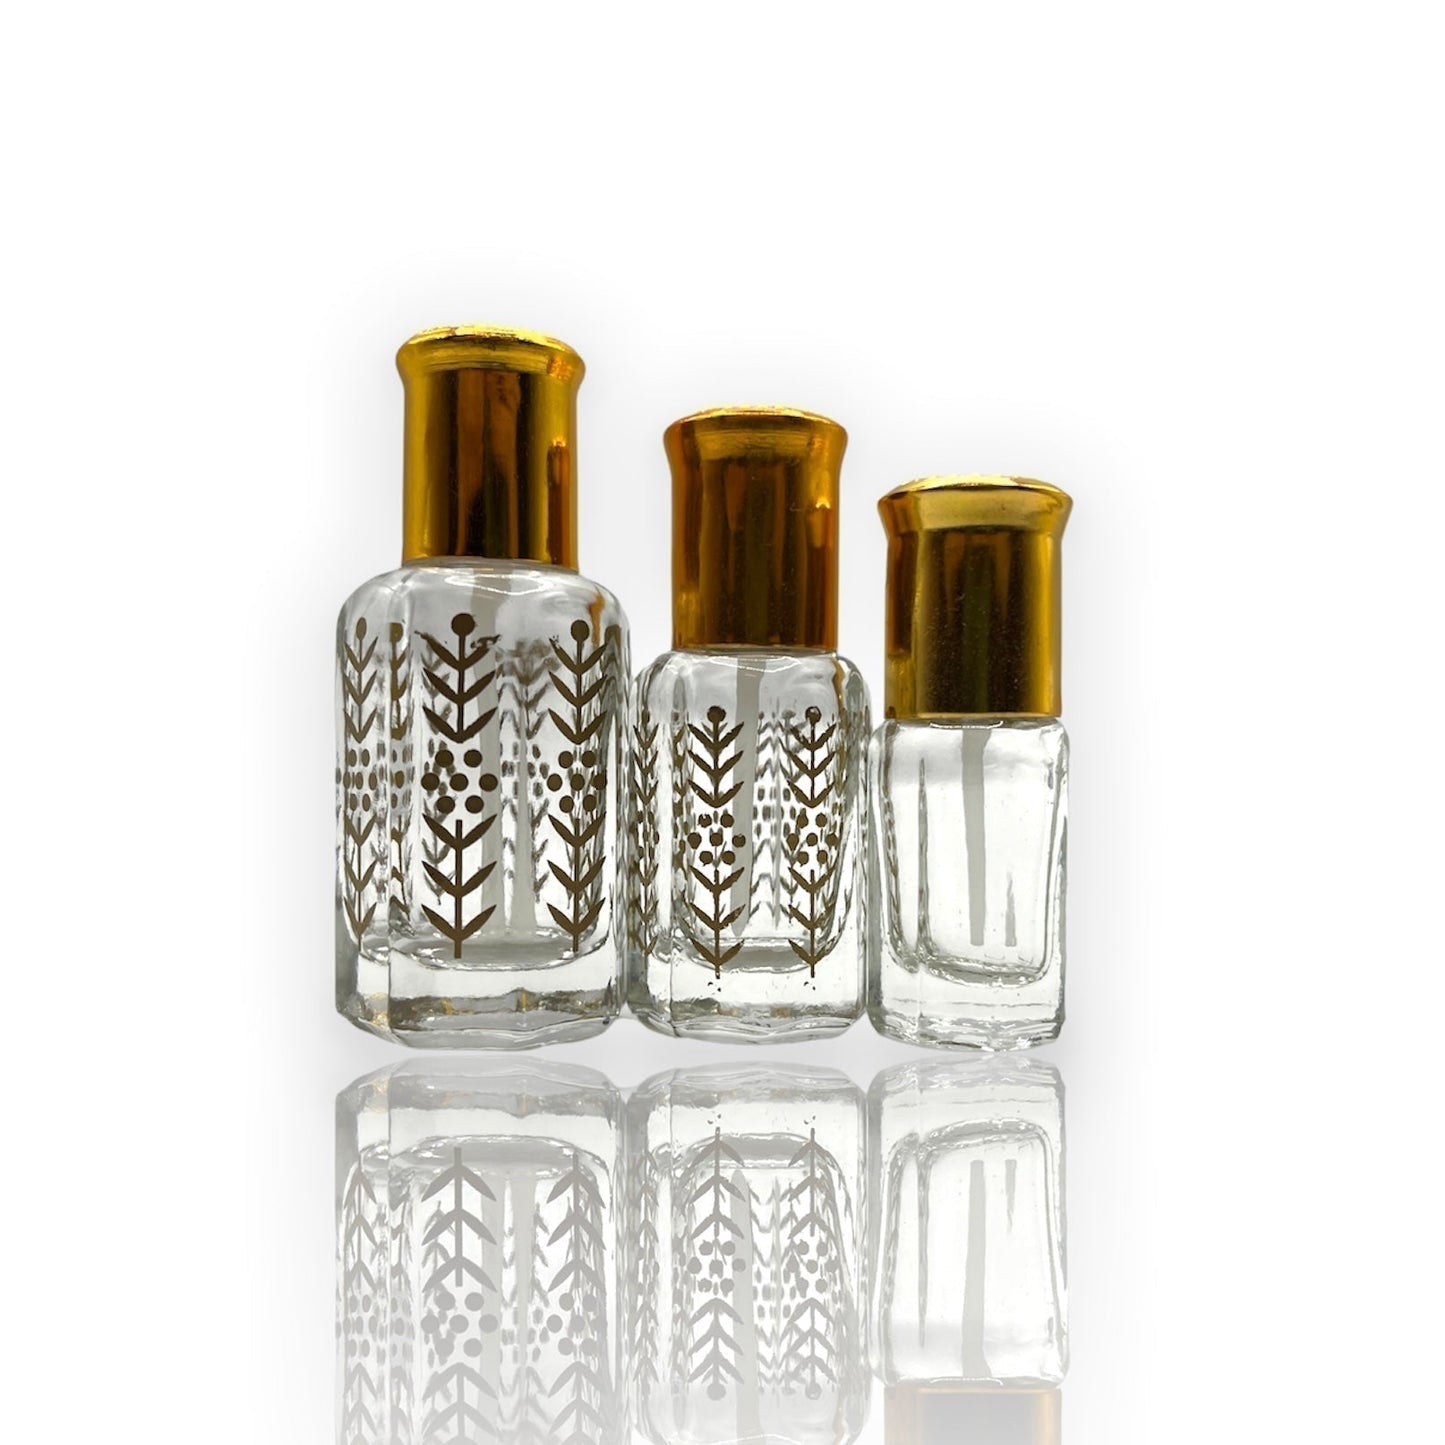 M-27 Oil Perfume *Inspired By Montale Arabian Tonka